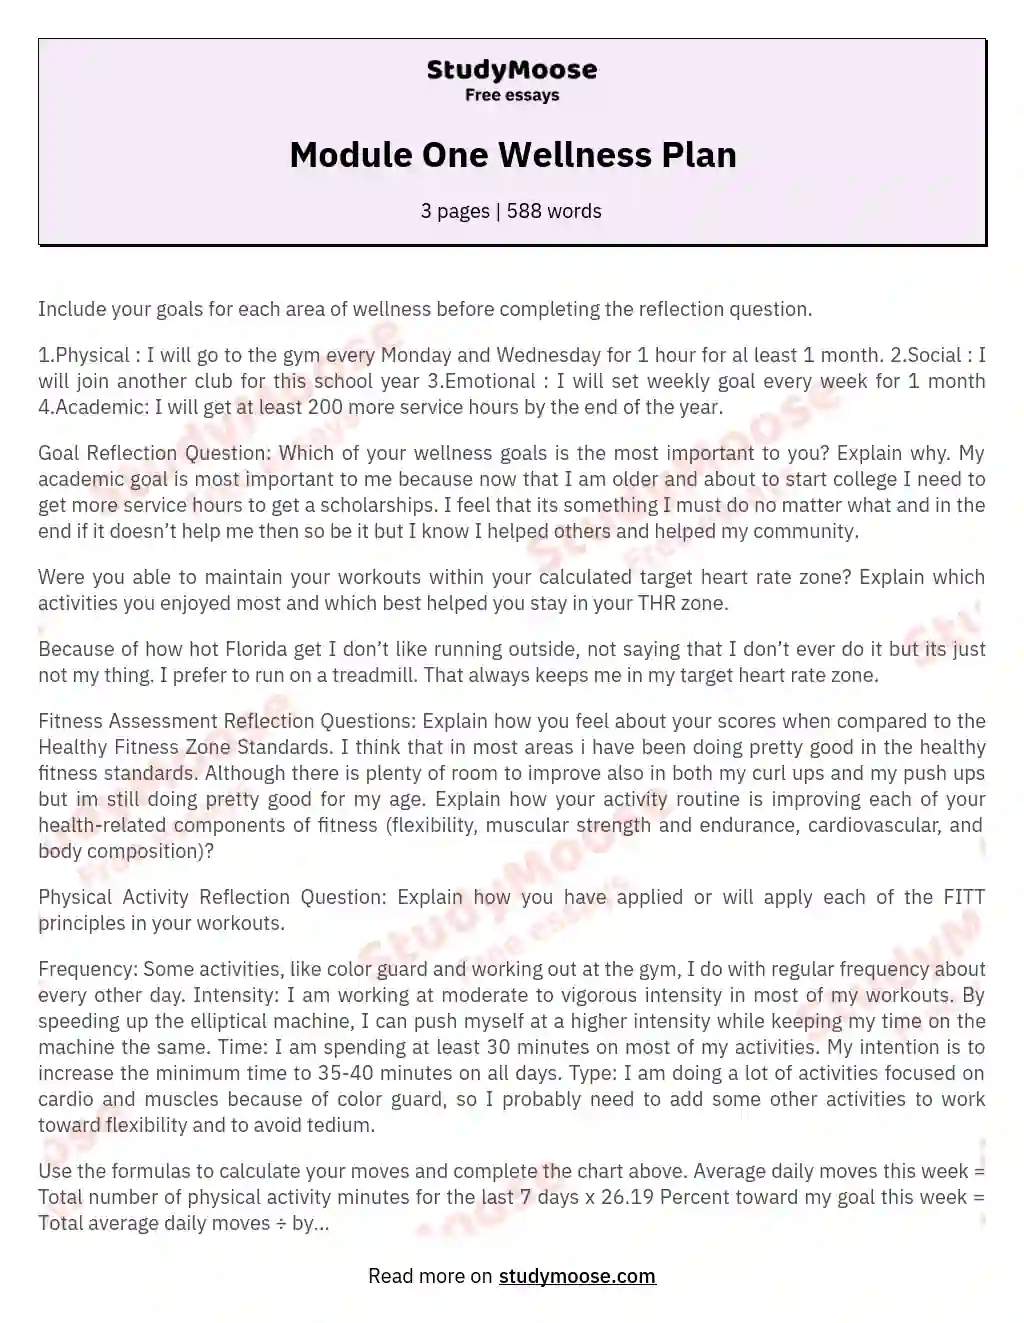 Module One Wellness Plan essay